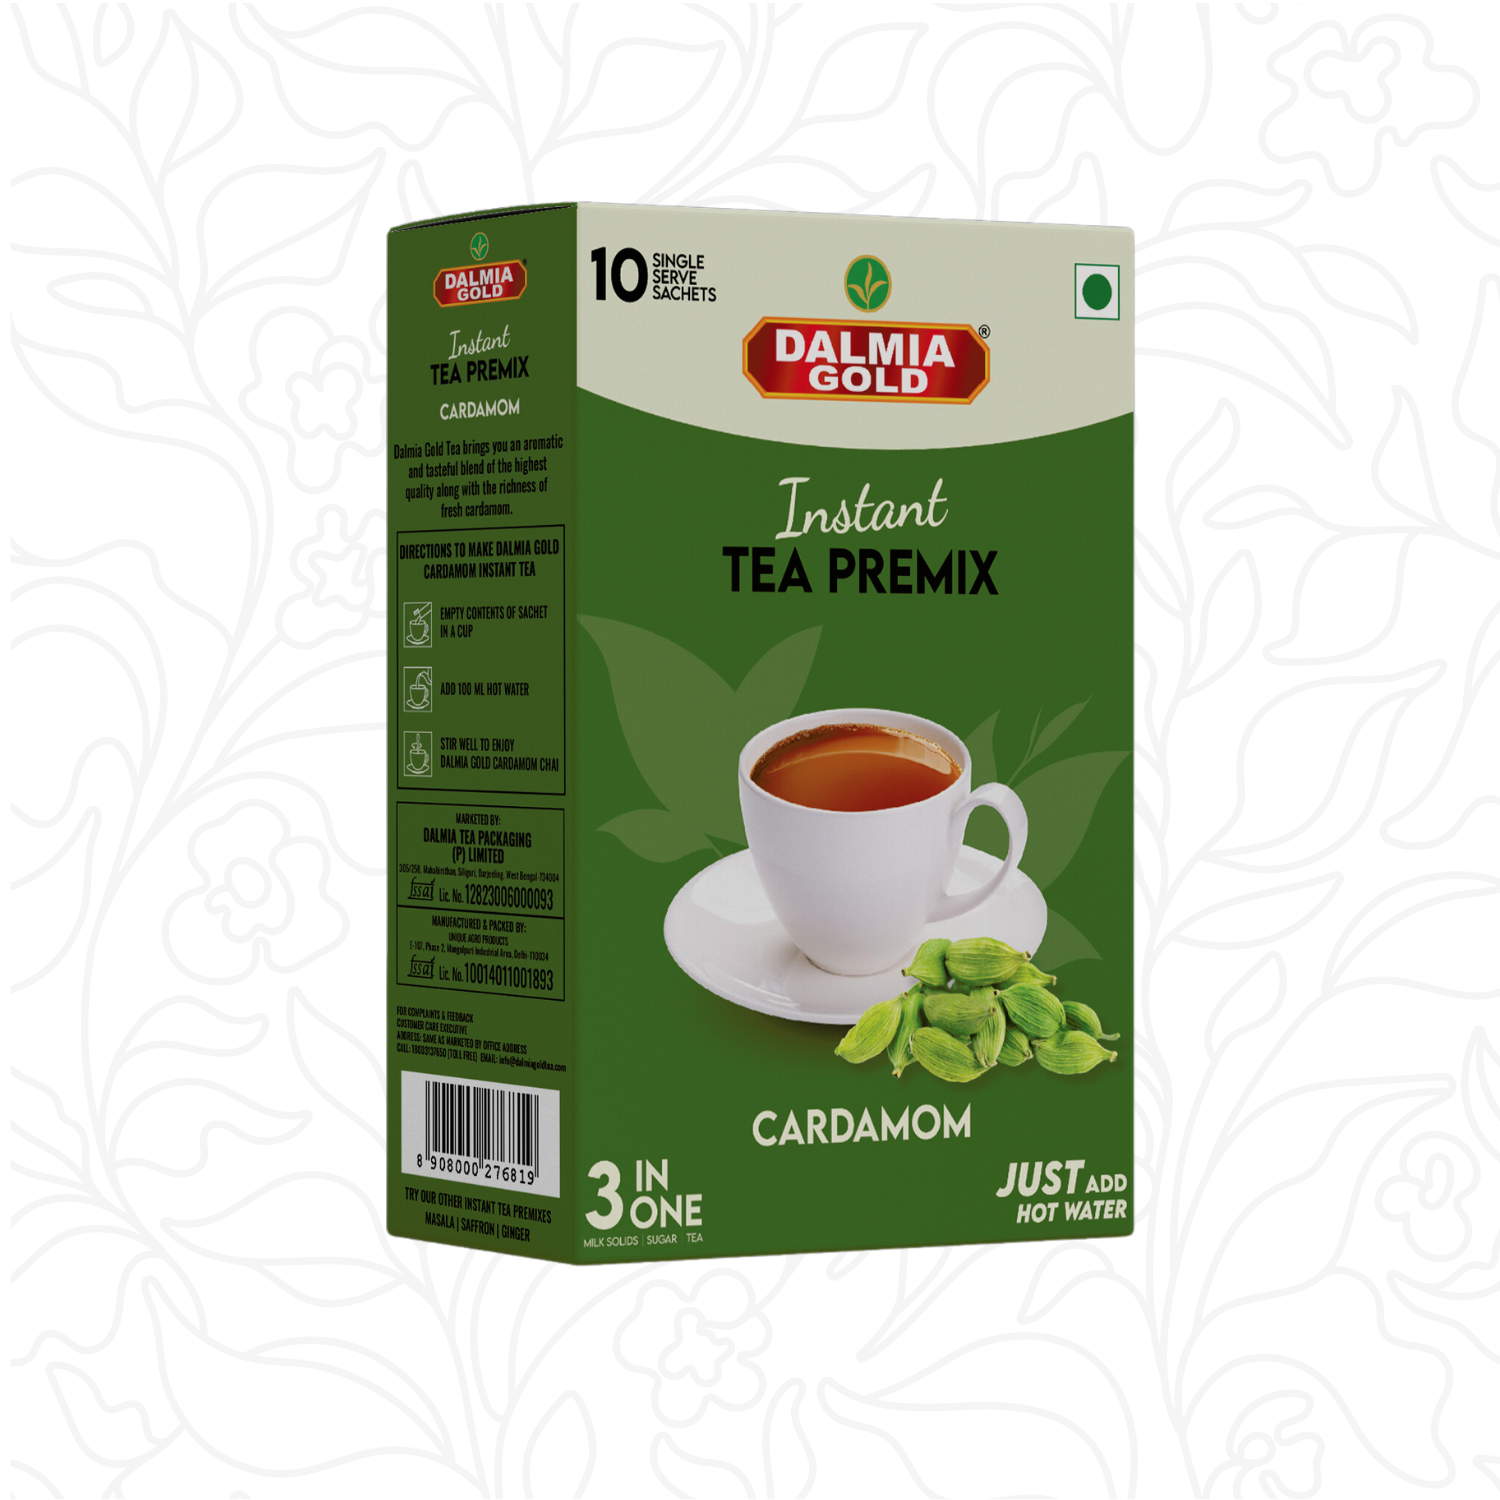 Dalmia Gold Cardamom Tea Premix